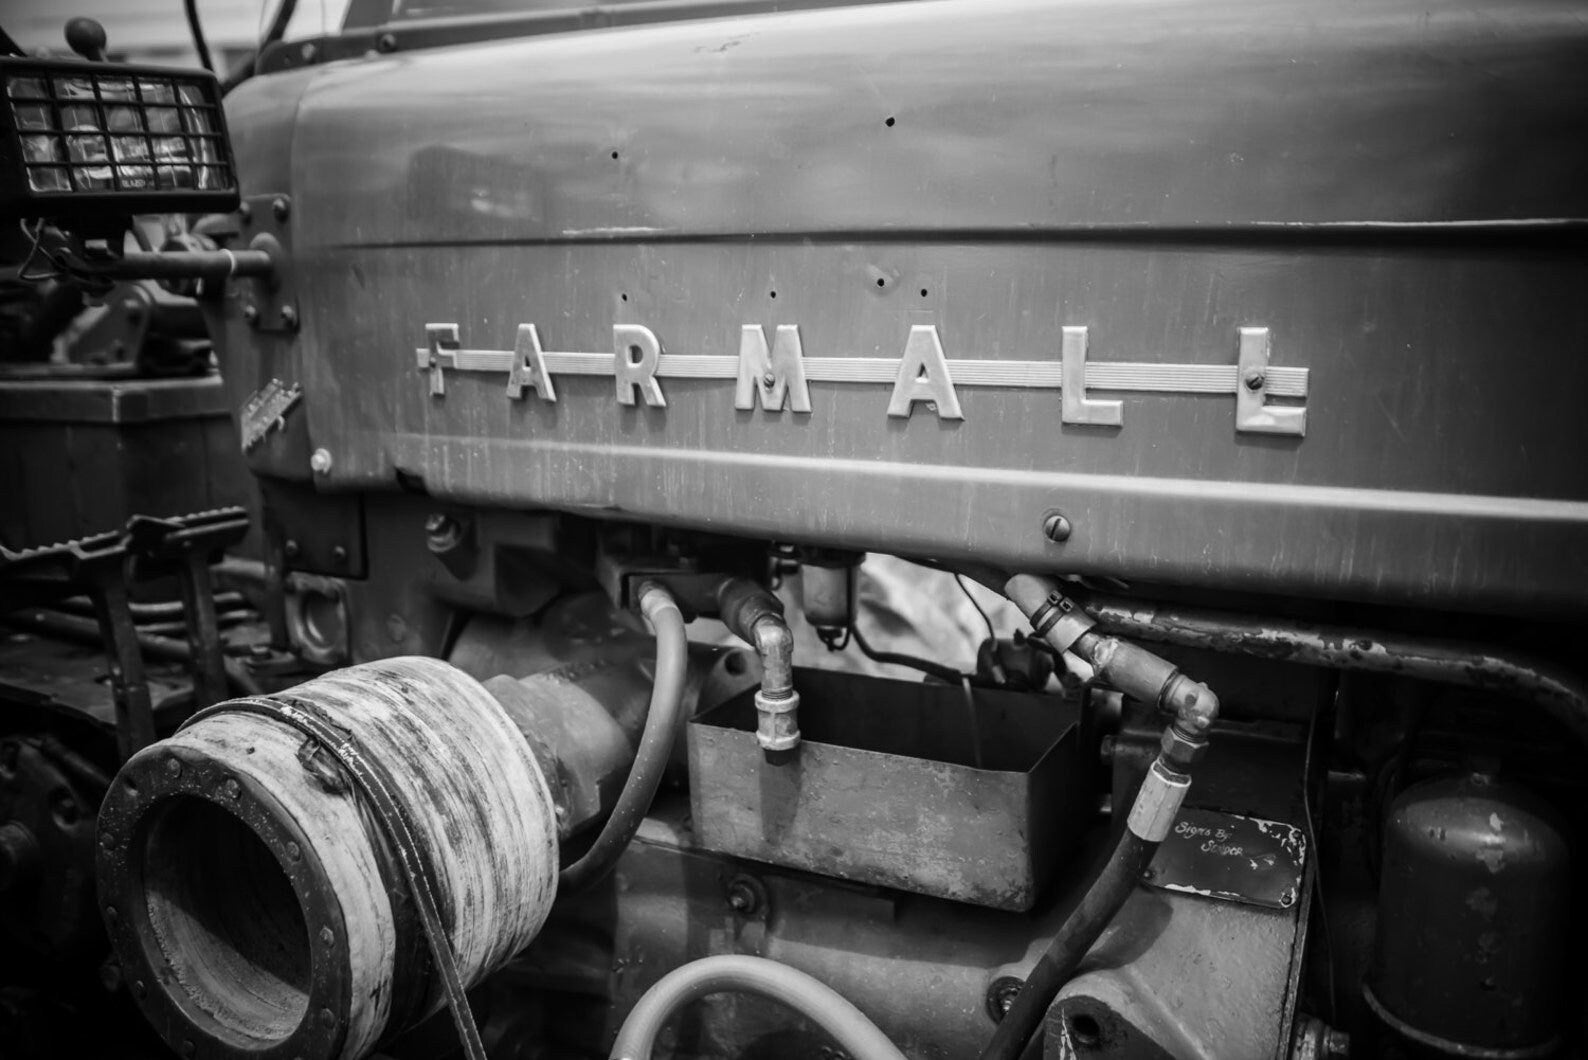 Farmall Tractor Photograph - Black & White - Tractor Photography, Americana Photography, Farmhouse Photography, Metal Wall Art